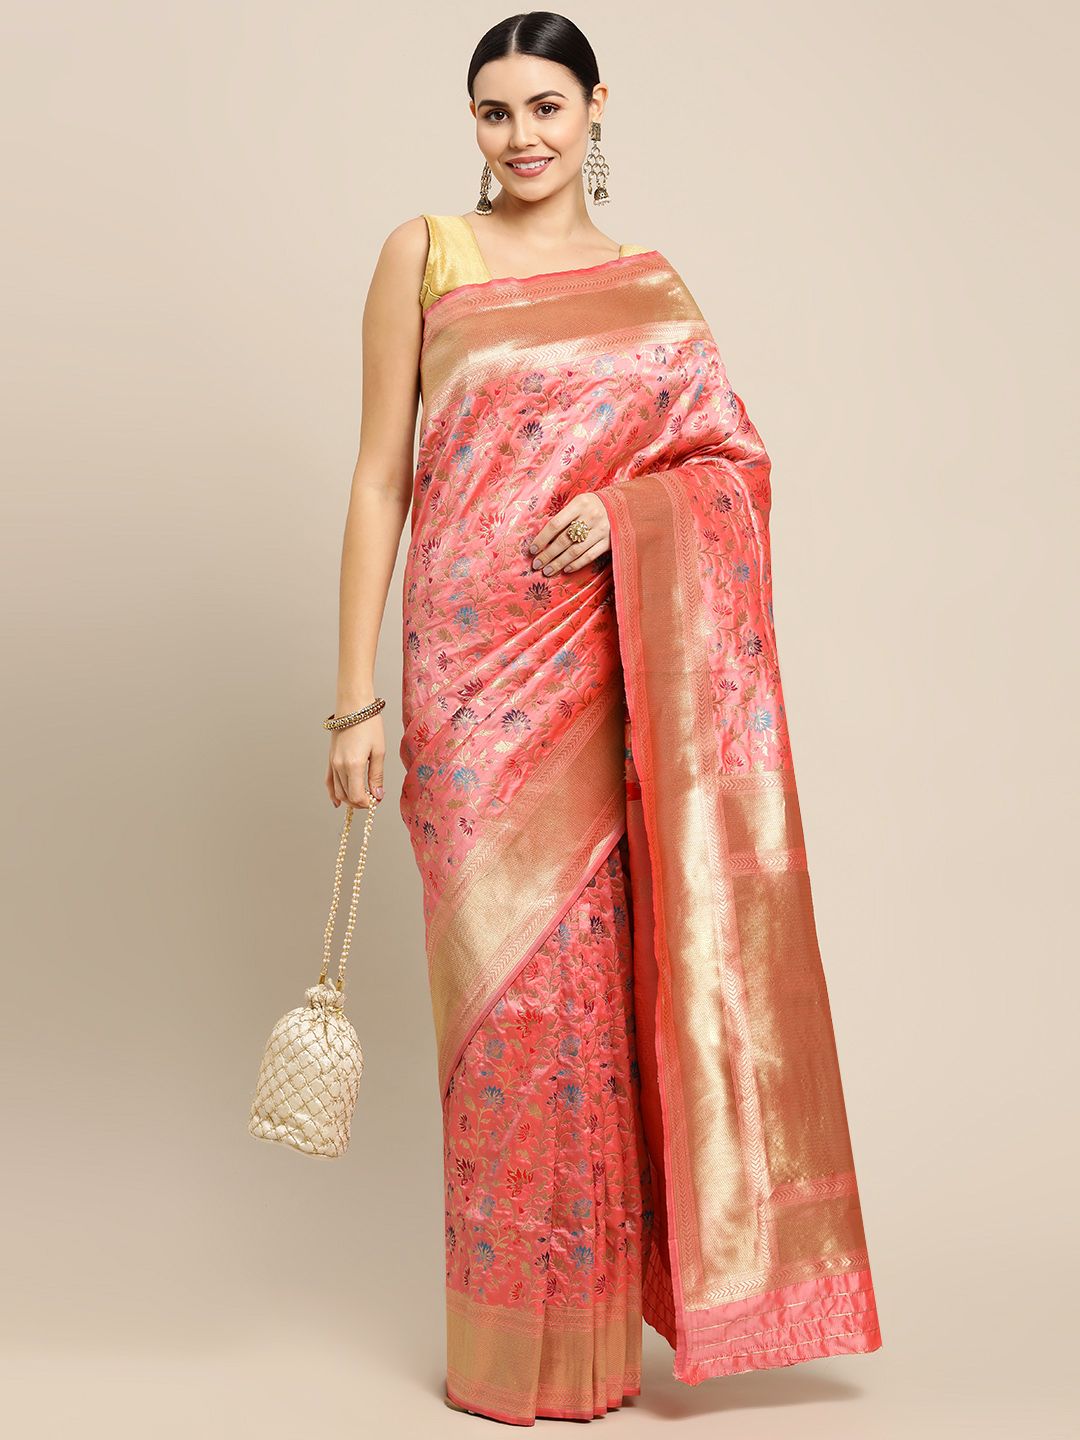 Peach Color Bollywood Festival Banarasi Silk Saree and Heavy designer Look Meenakari Saree